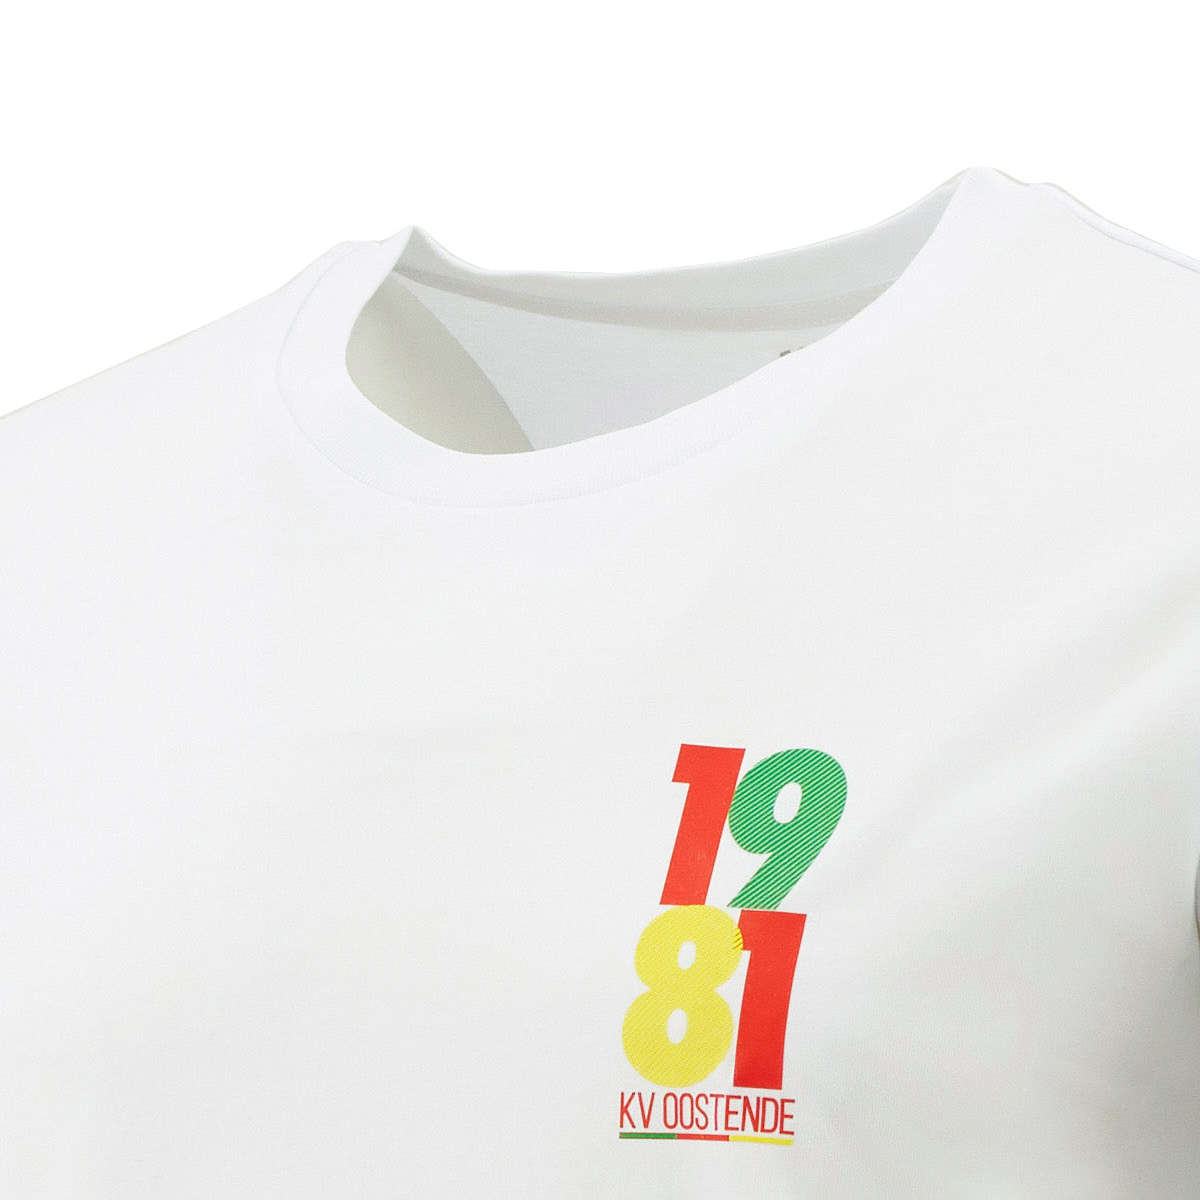 Topfanz White T-shirt 1981 KV Oostende - KVO